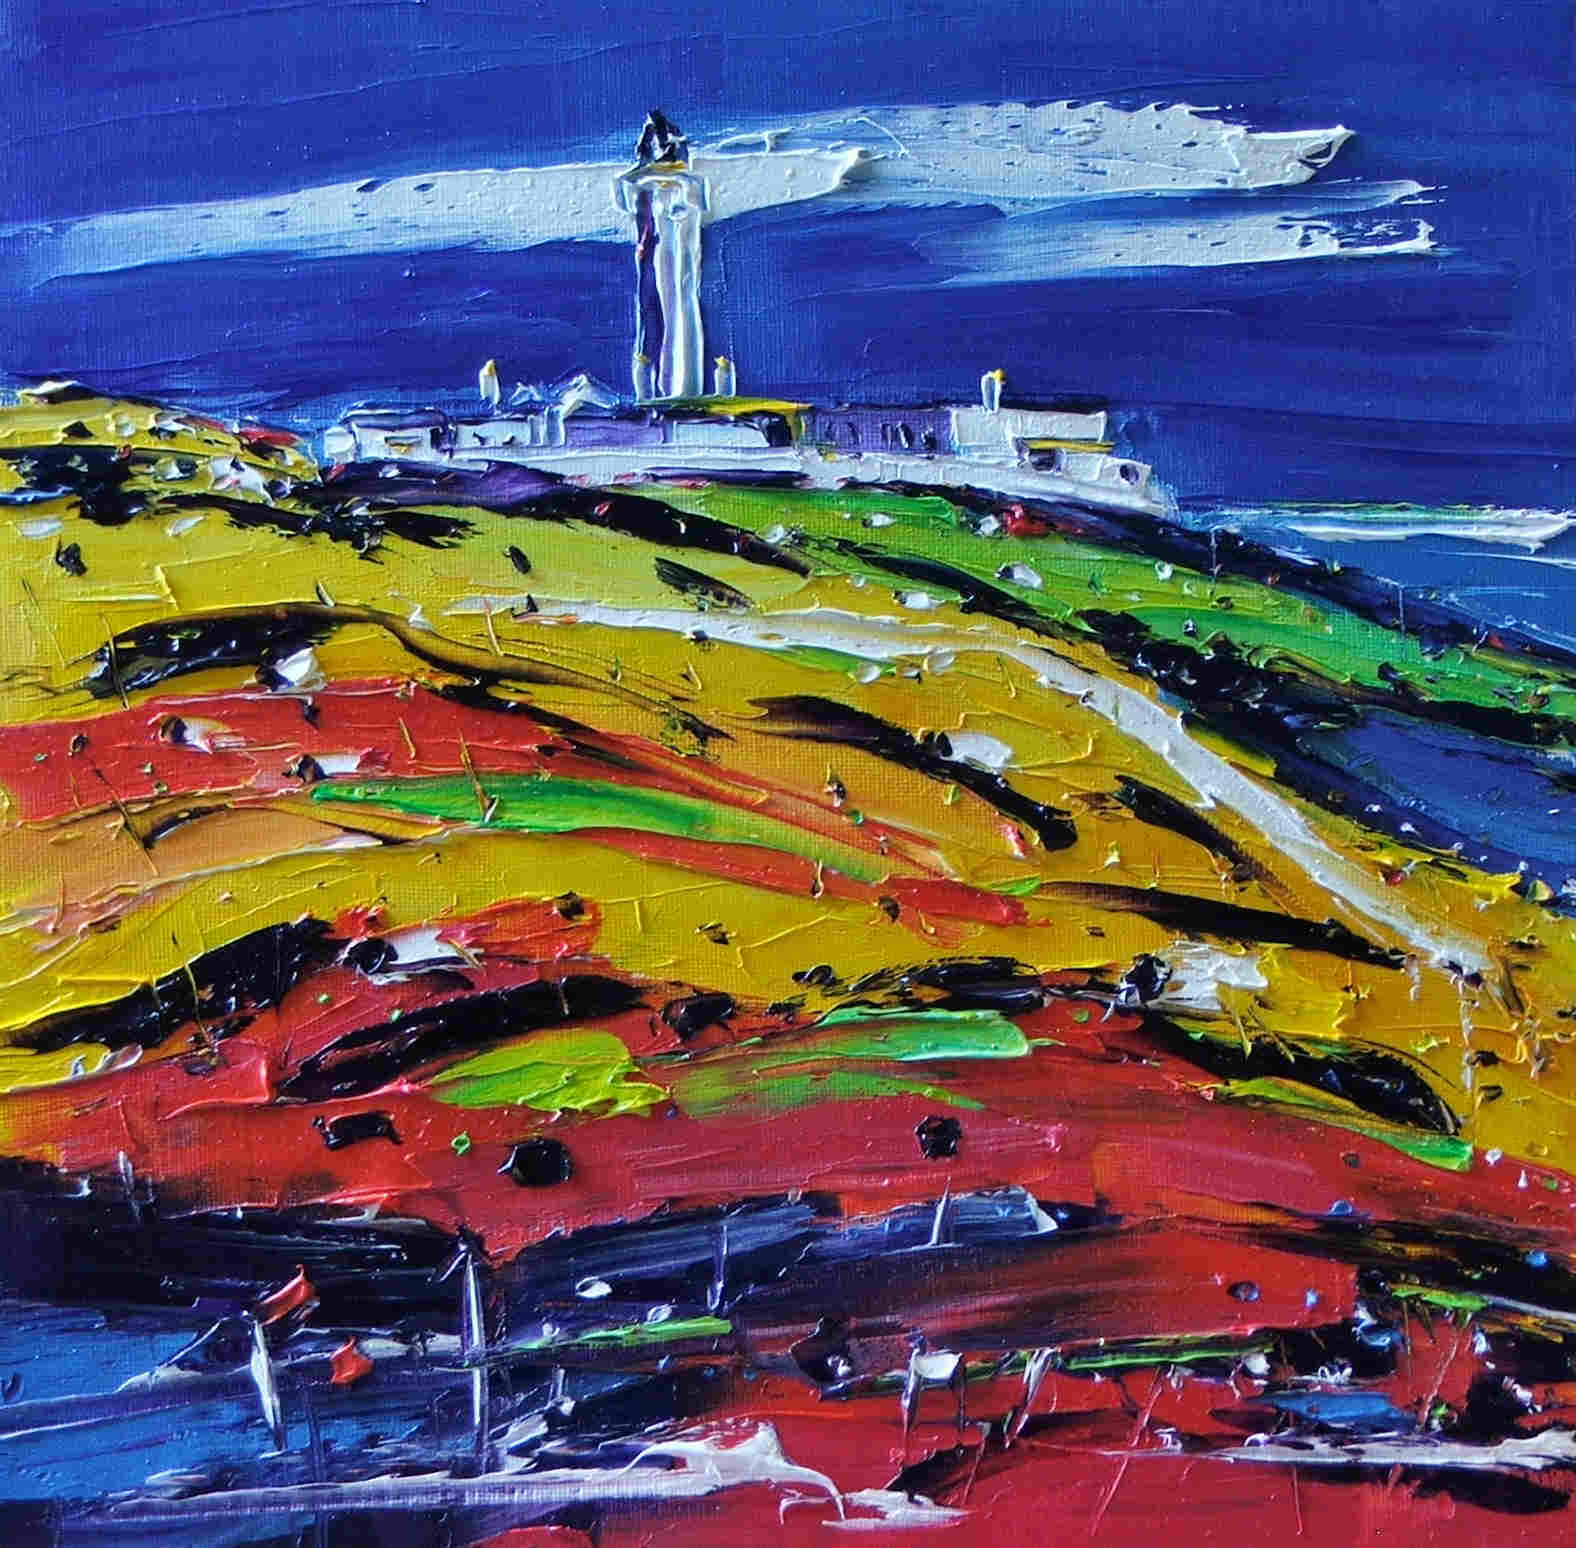 'Mull of Galloway Lighthouse' by artist Pat Kramek